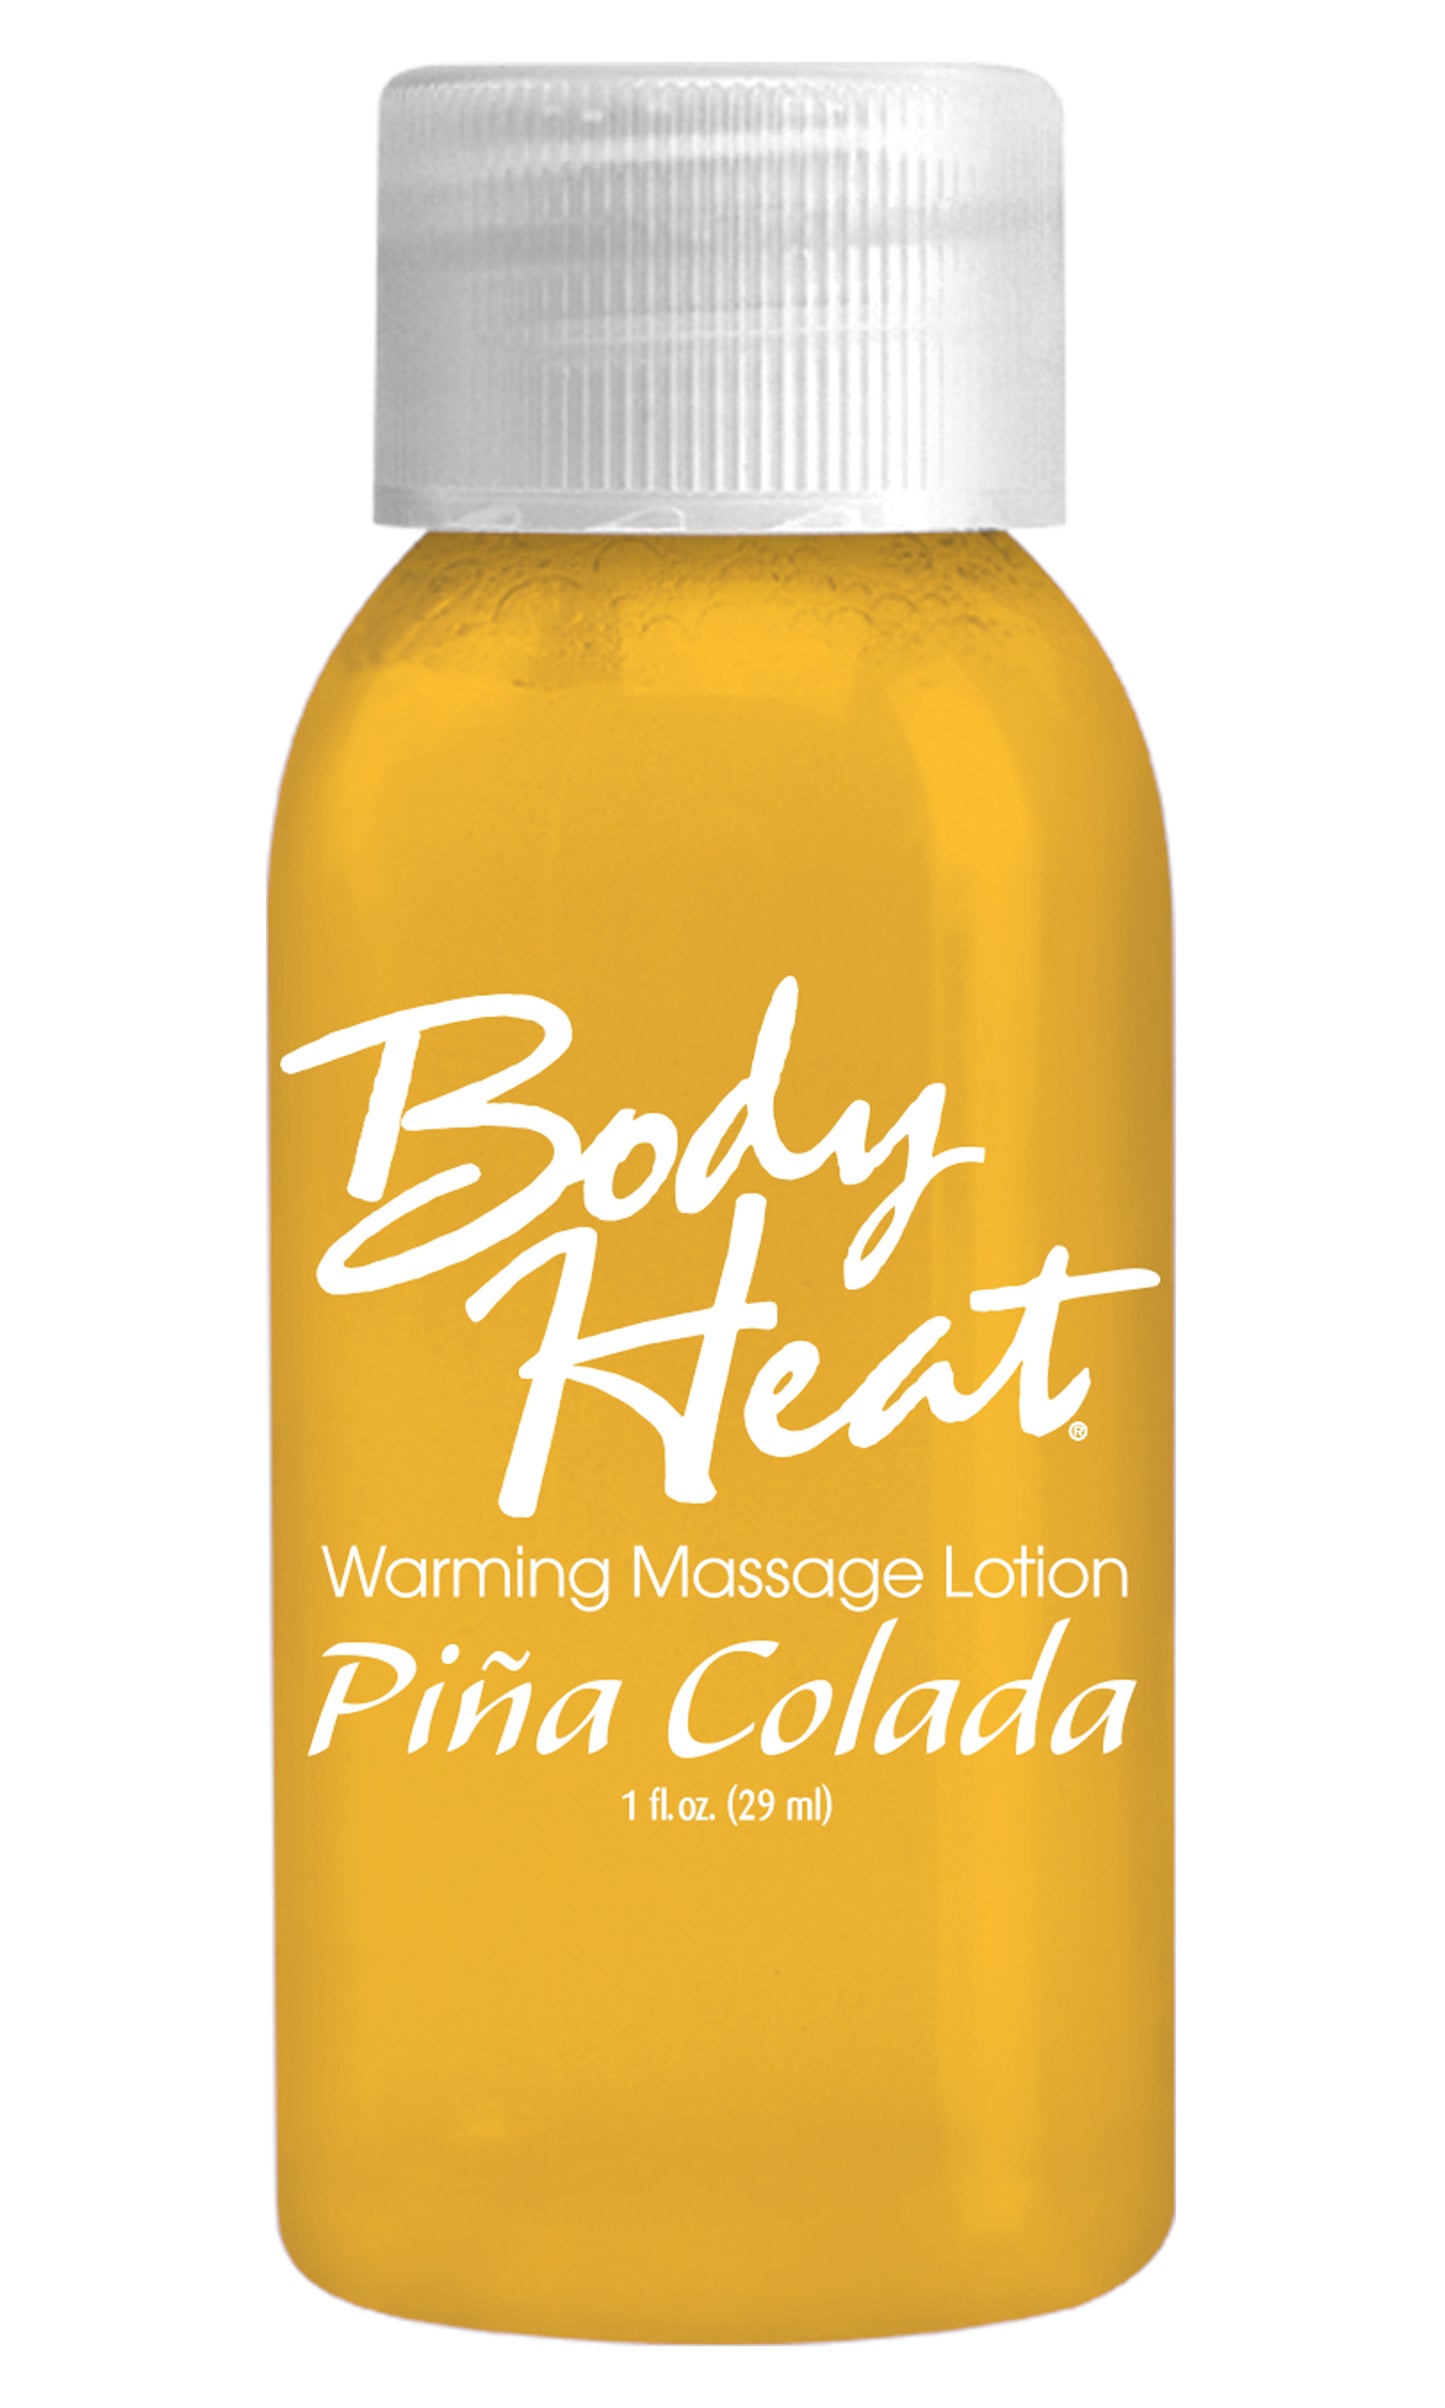 Body Heat Warming Massage Lotion Piña Colada